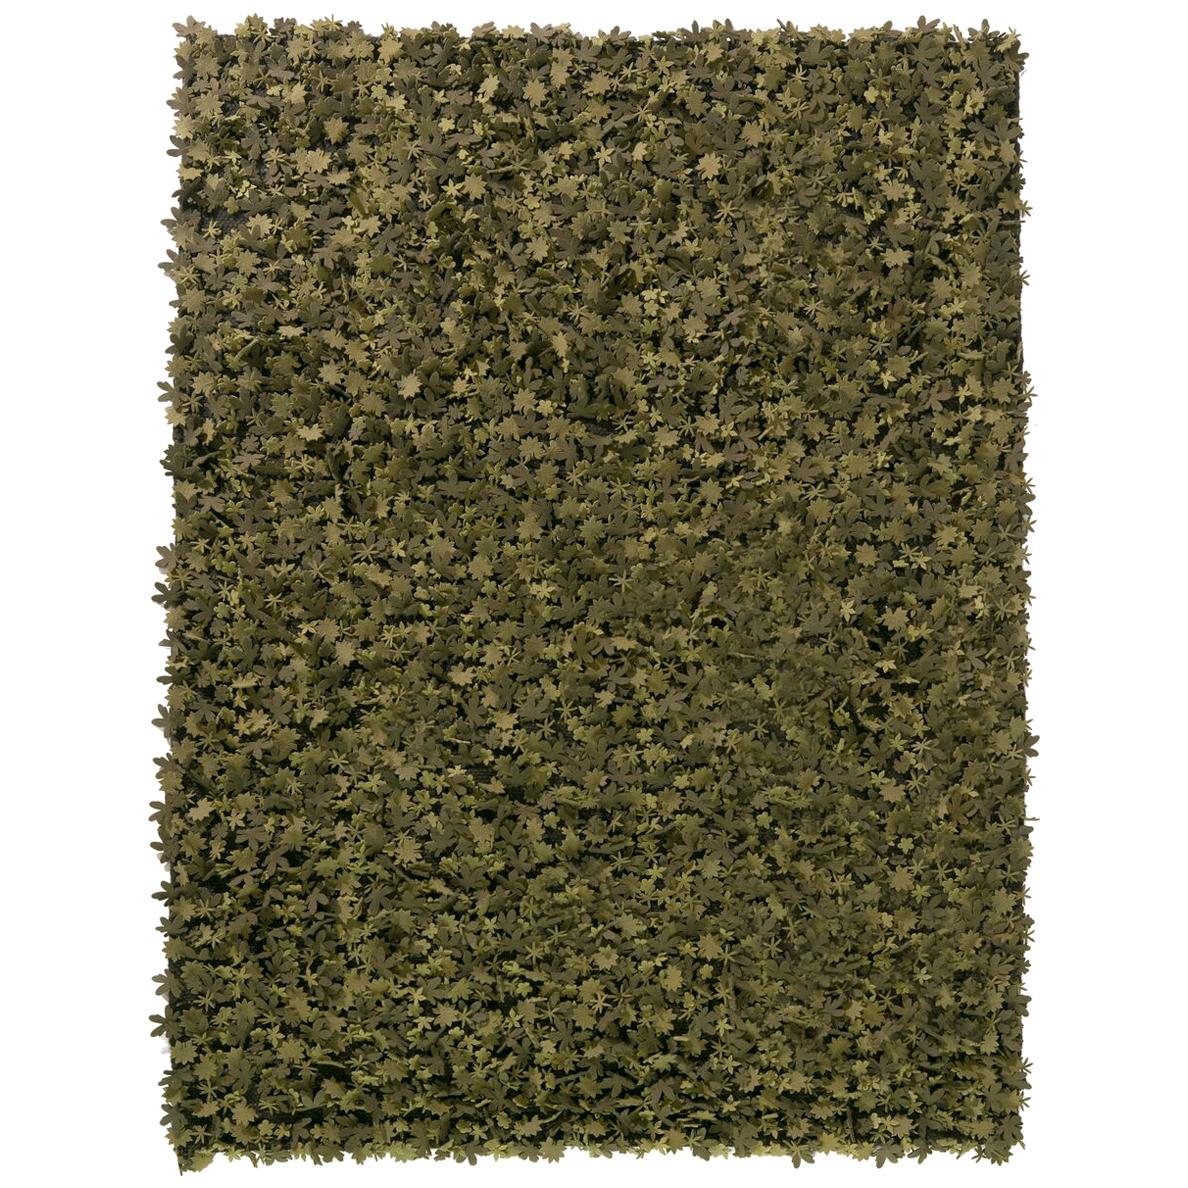 Field of Flowers Hand-Loomed Green Wool Felt Rug by Studio Tord Boontje, Medium